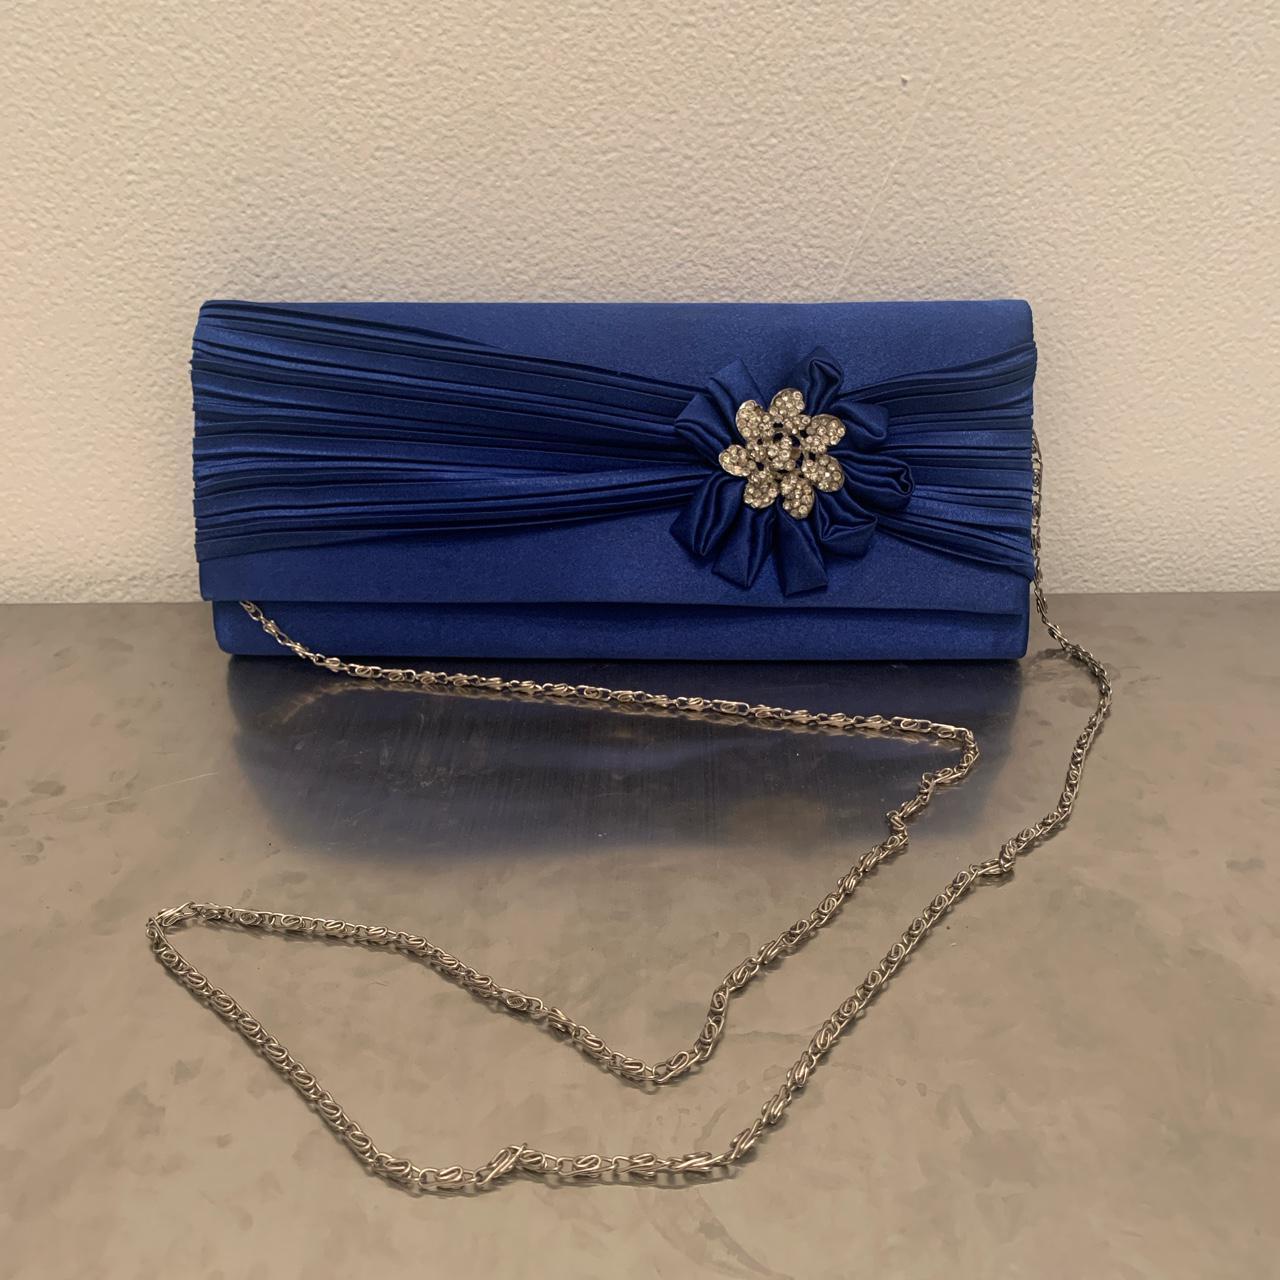 Michael Kors | Bags | Like New Michael Kors Royal Blue Leather Crossbody Bag  | Poshmark